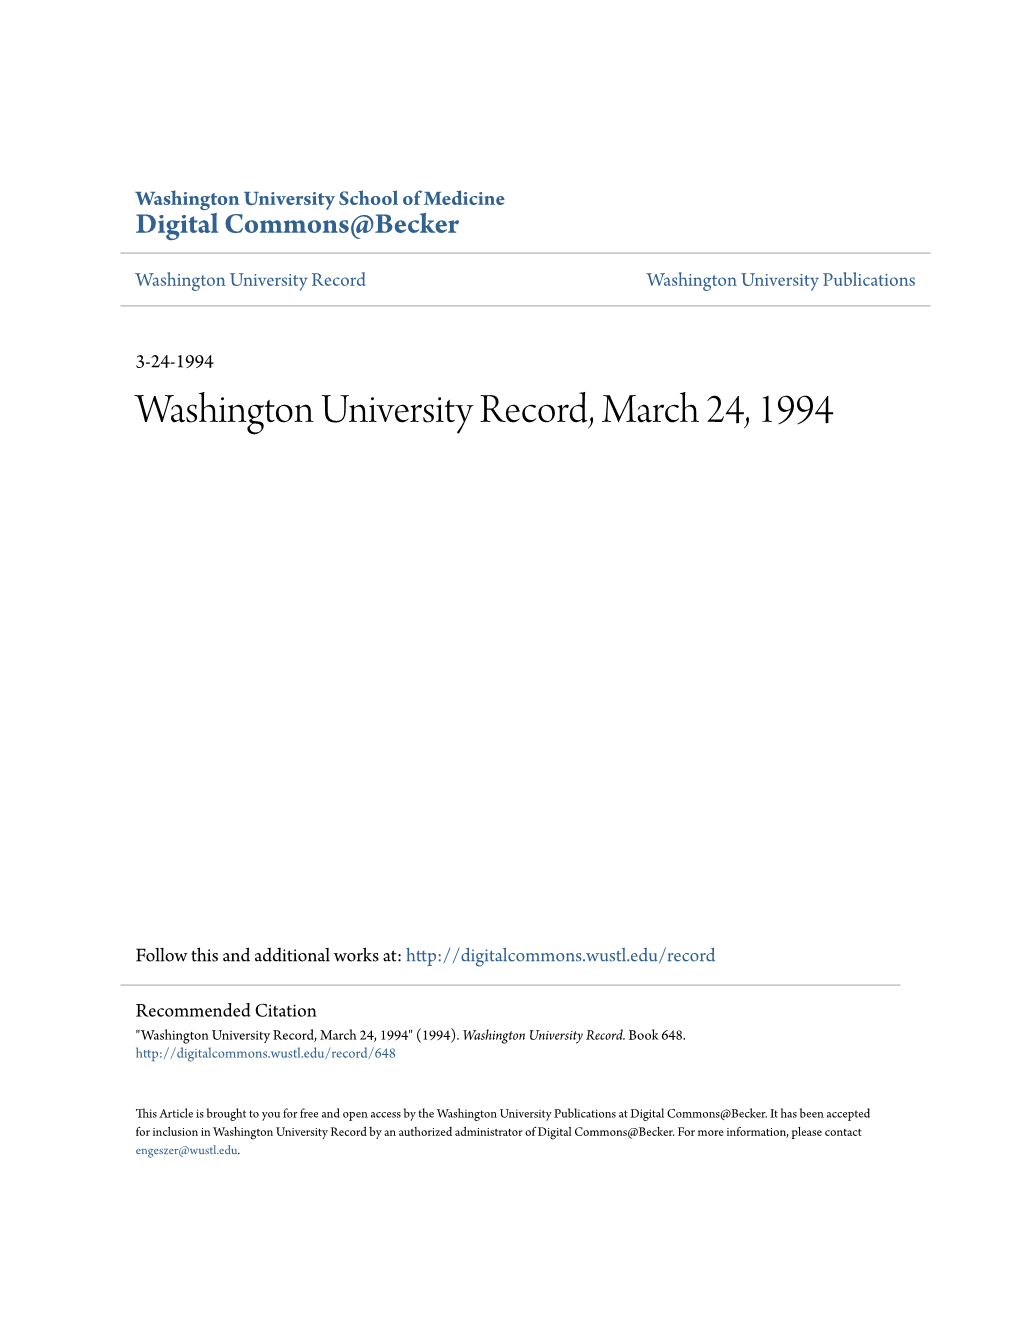 Washington University Record, March 24, 1994